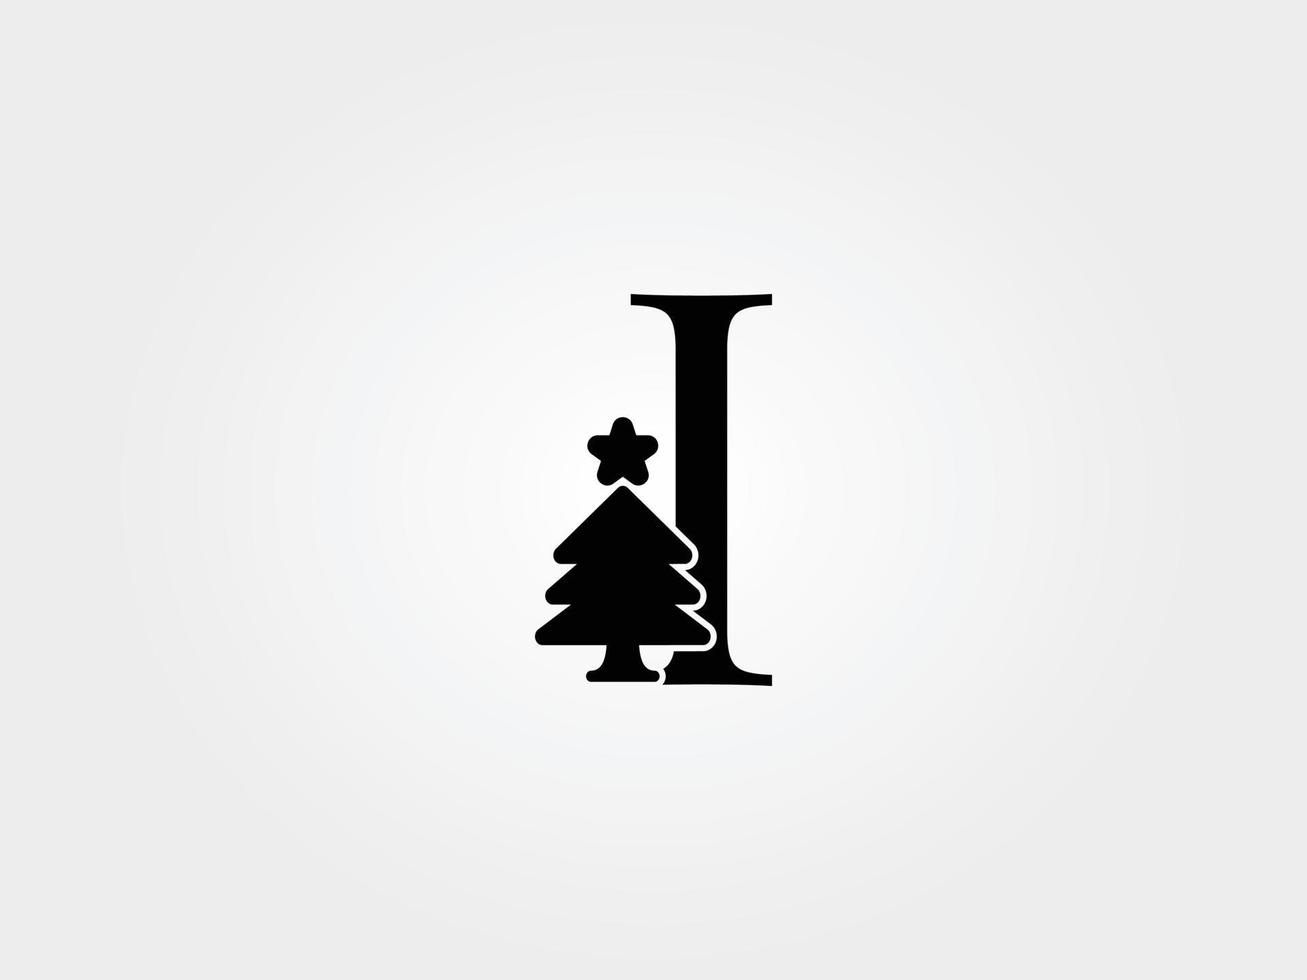 kerstboom letters i vector